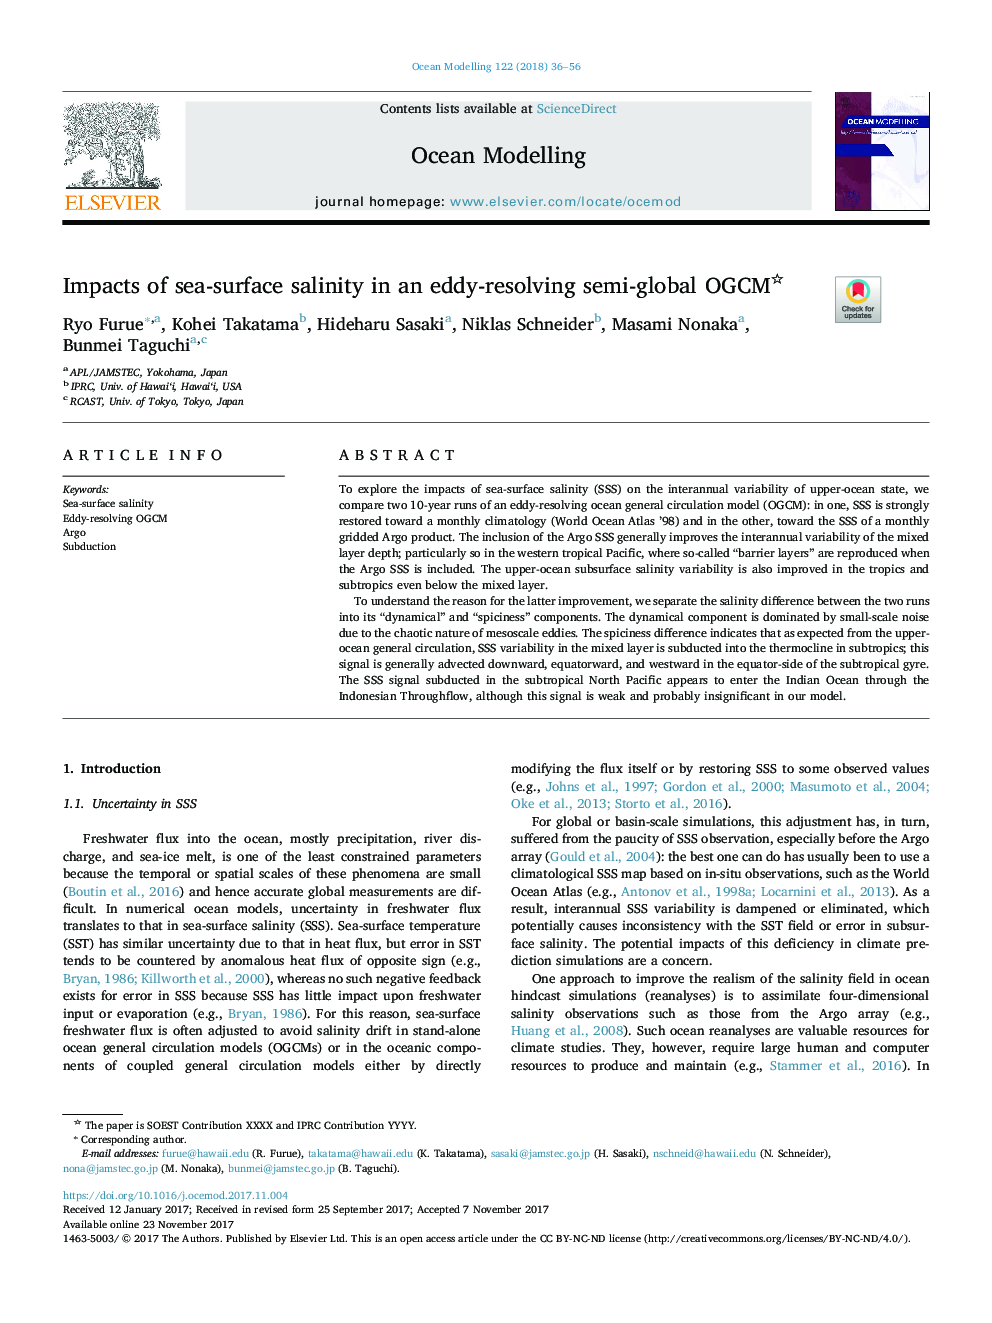 Impacts of sea-surface salinity in an eddy-resolving semi-global OGCM